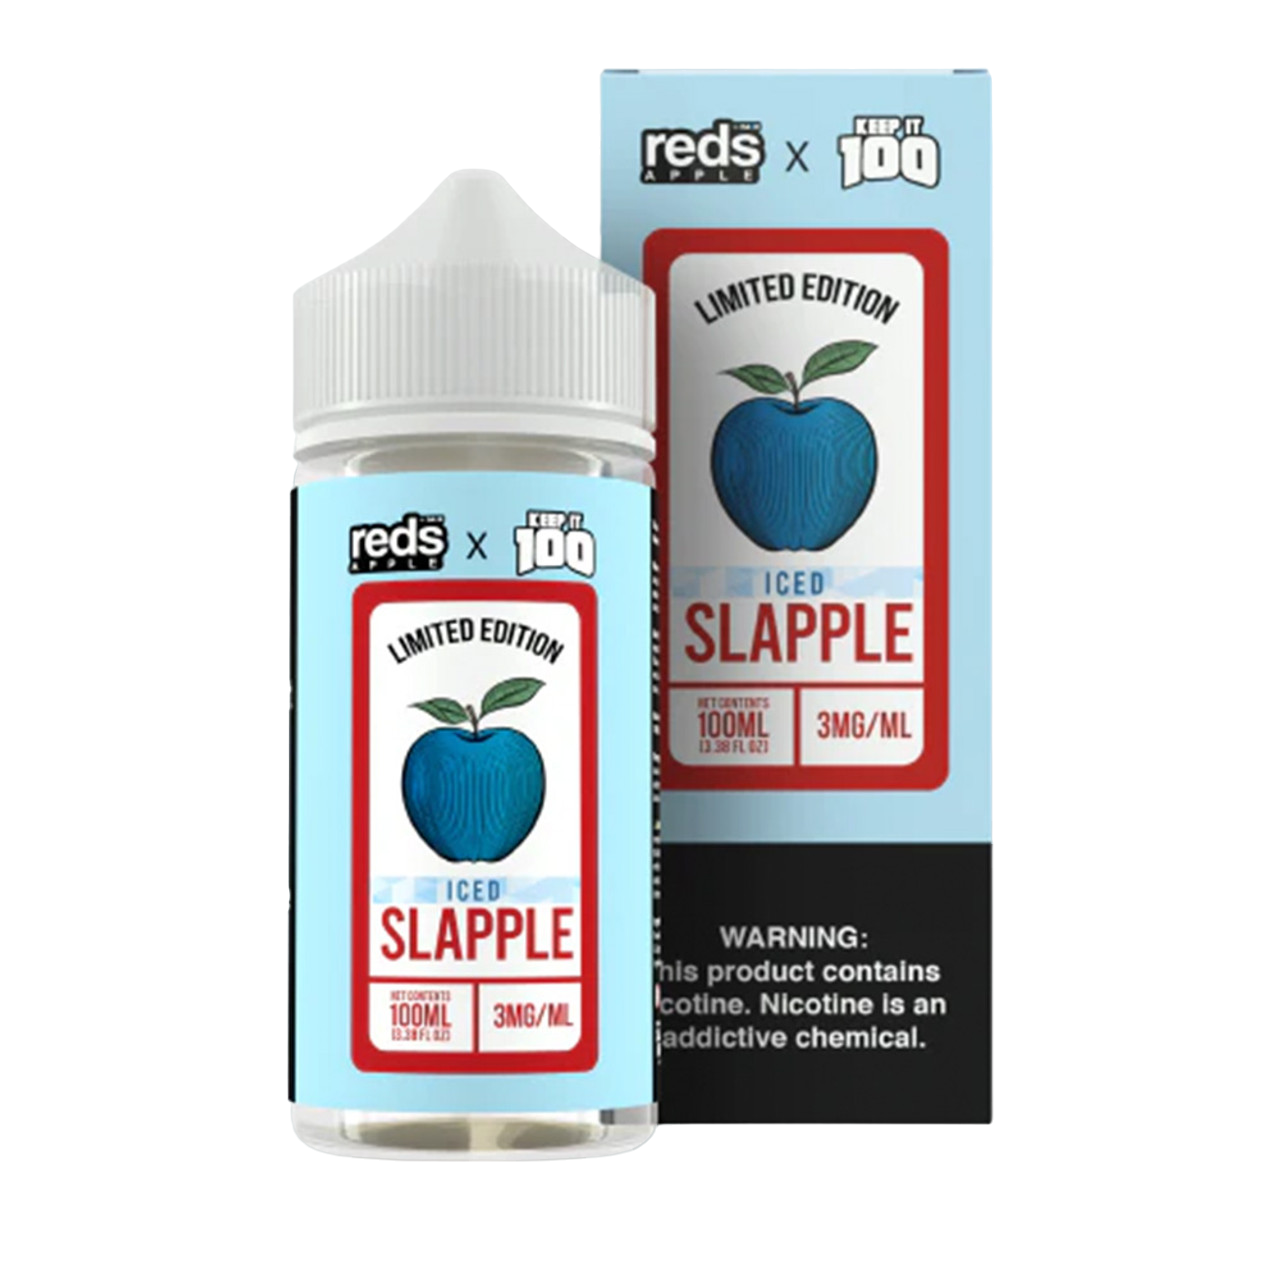 Reds Apple x Keep It 100 Limited Edition Nicotine E-Liquid By 7 Daze 100ML Iced Slapple 